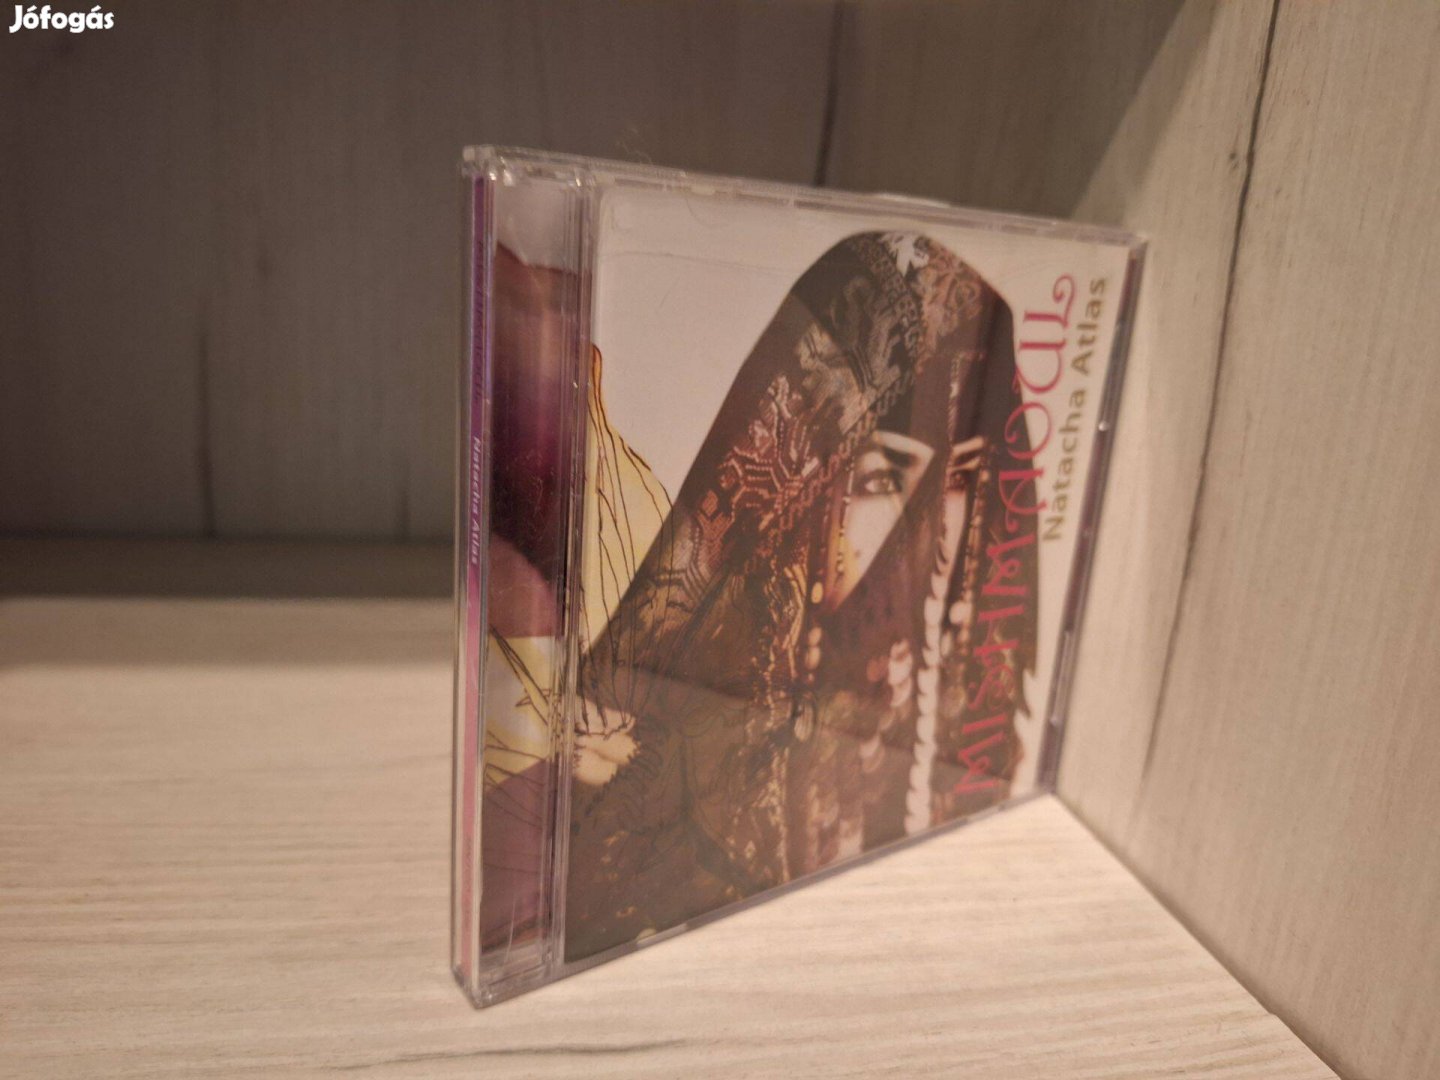 Natacha Atlas - Mish Maoul CD